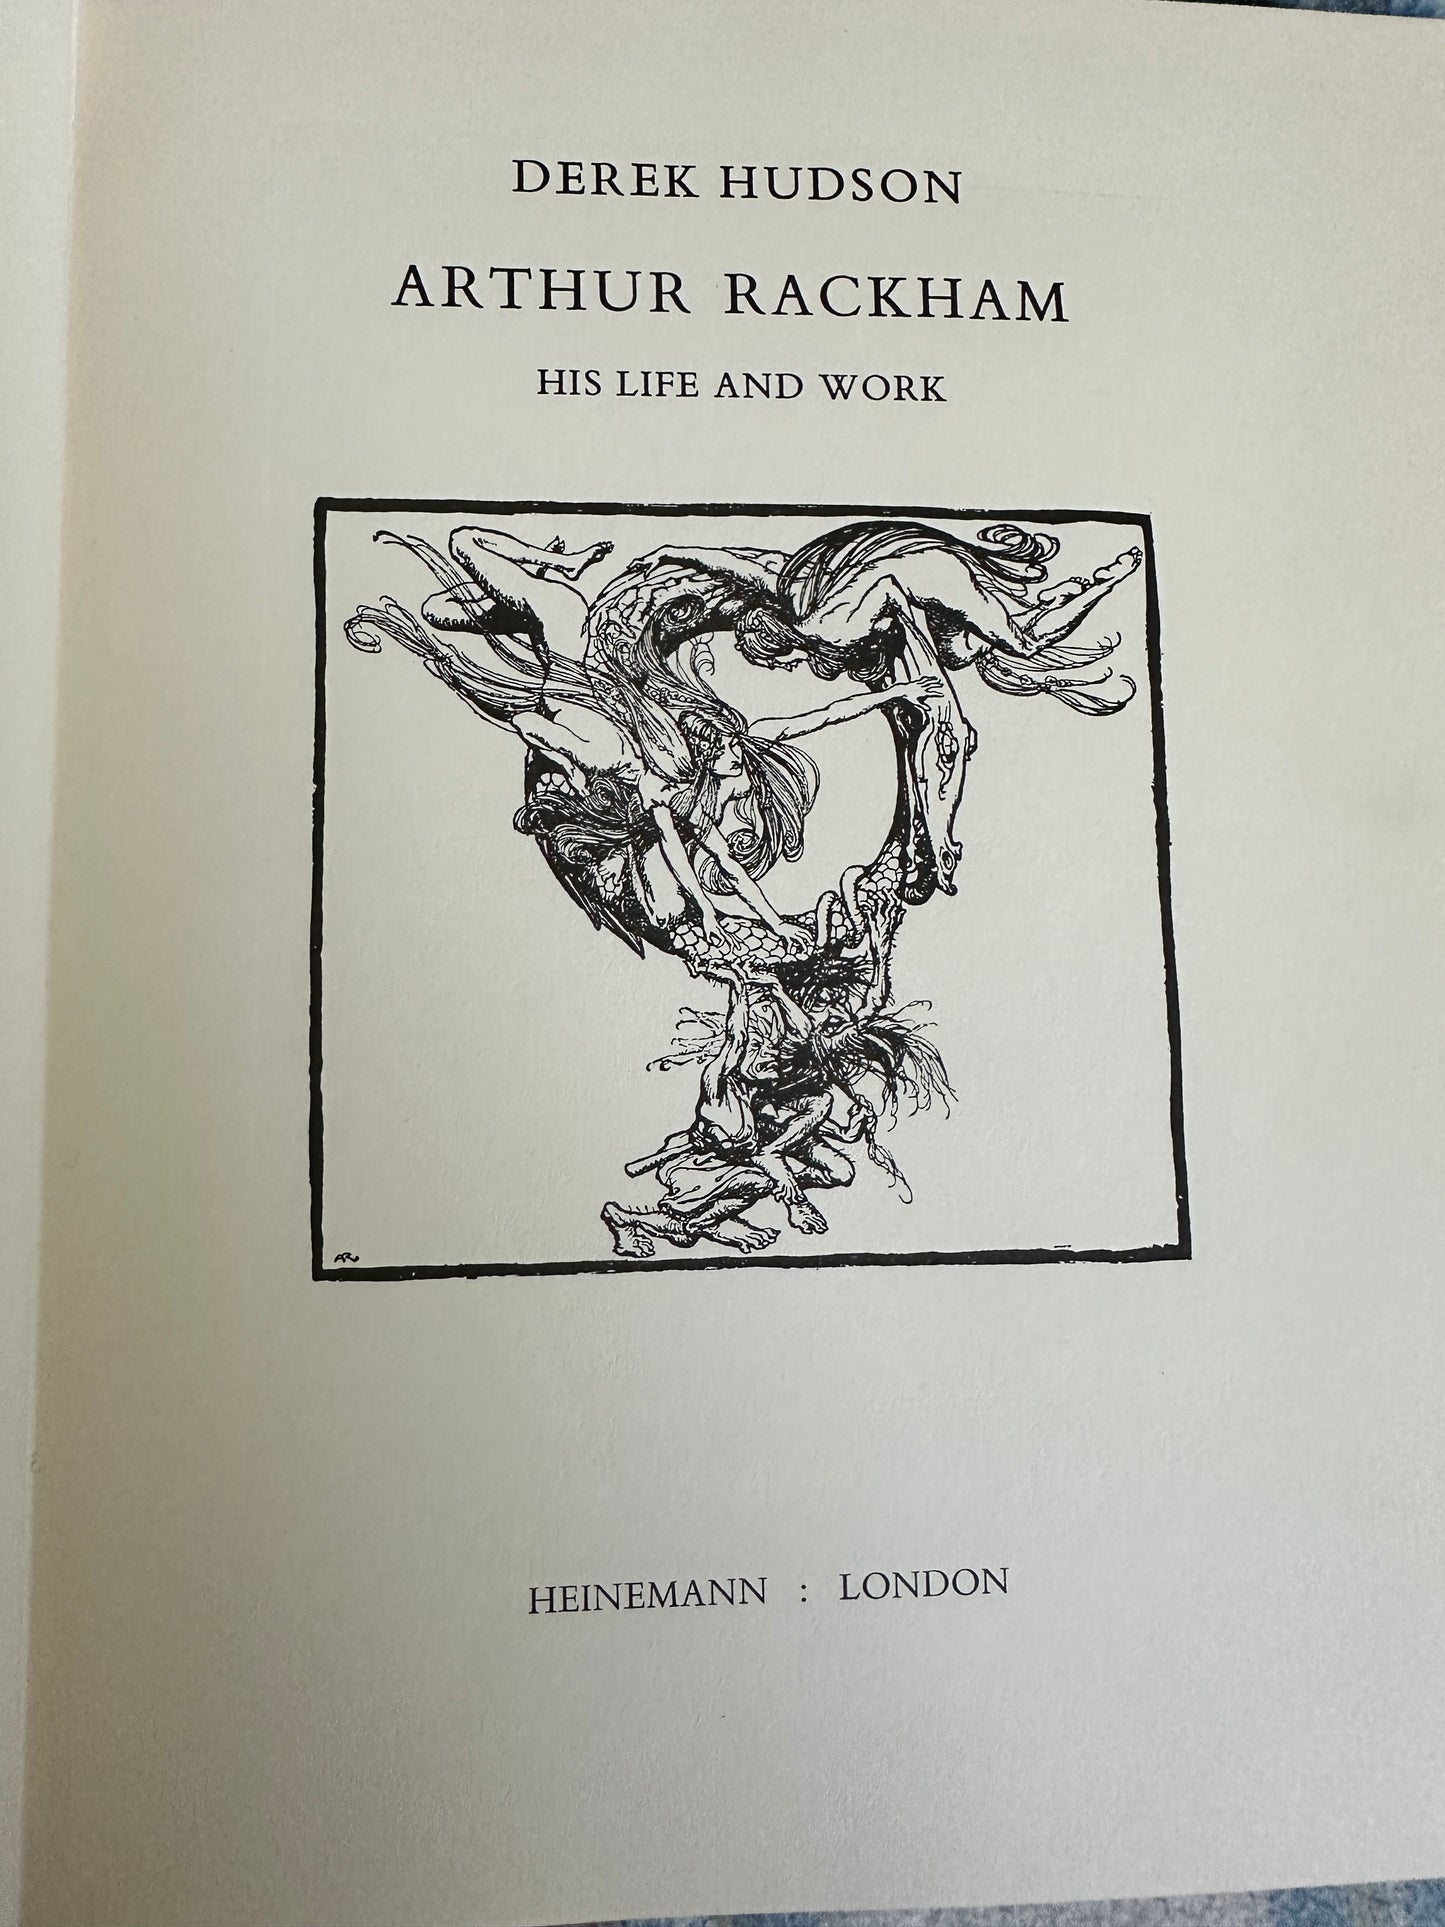 1976 Arthur Rackham His Life & Work - Derek Hudson(Heinemann)